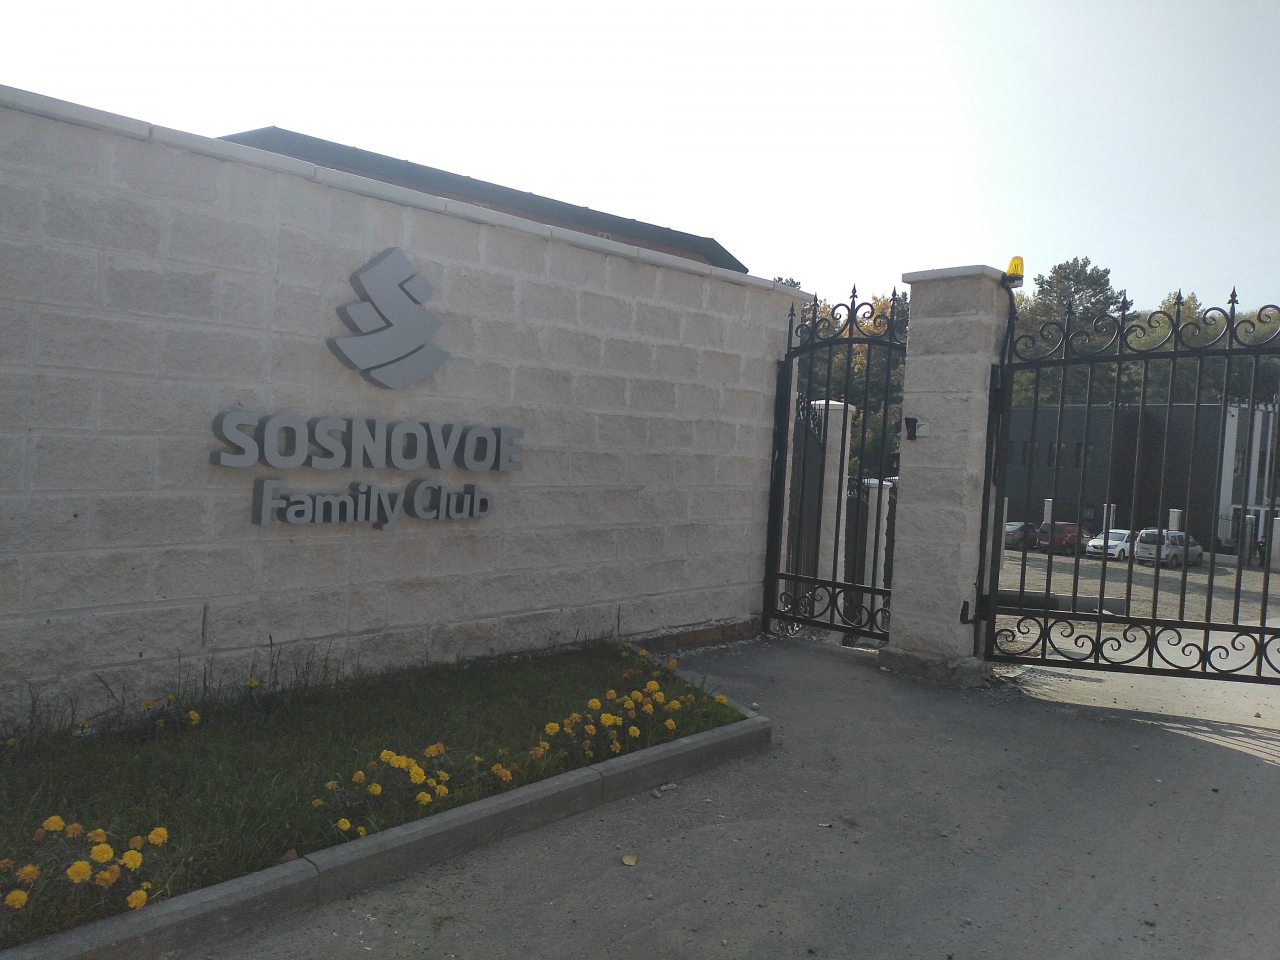 Парковка, Sosnovoe Family Club